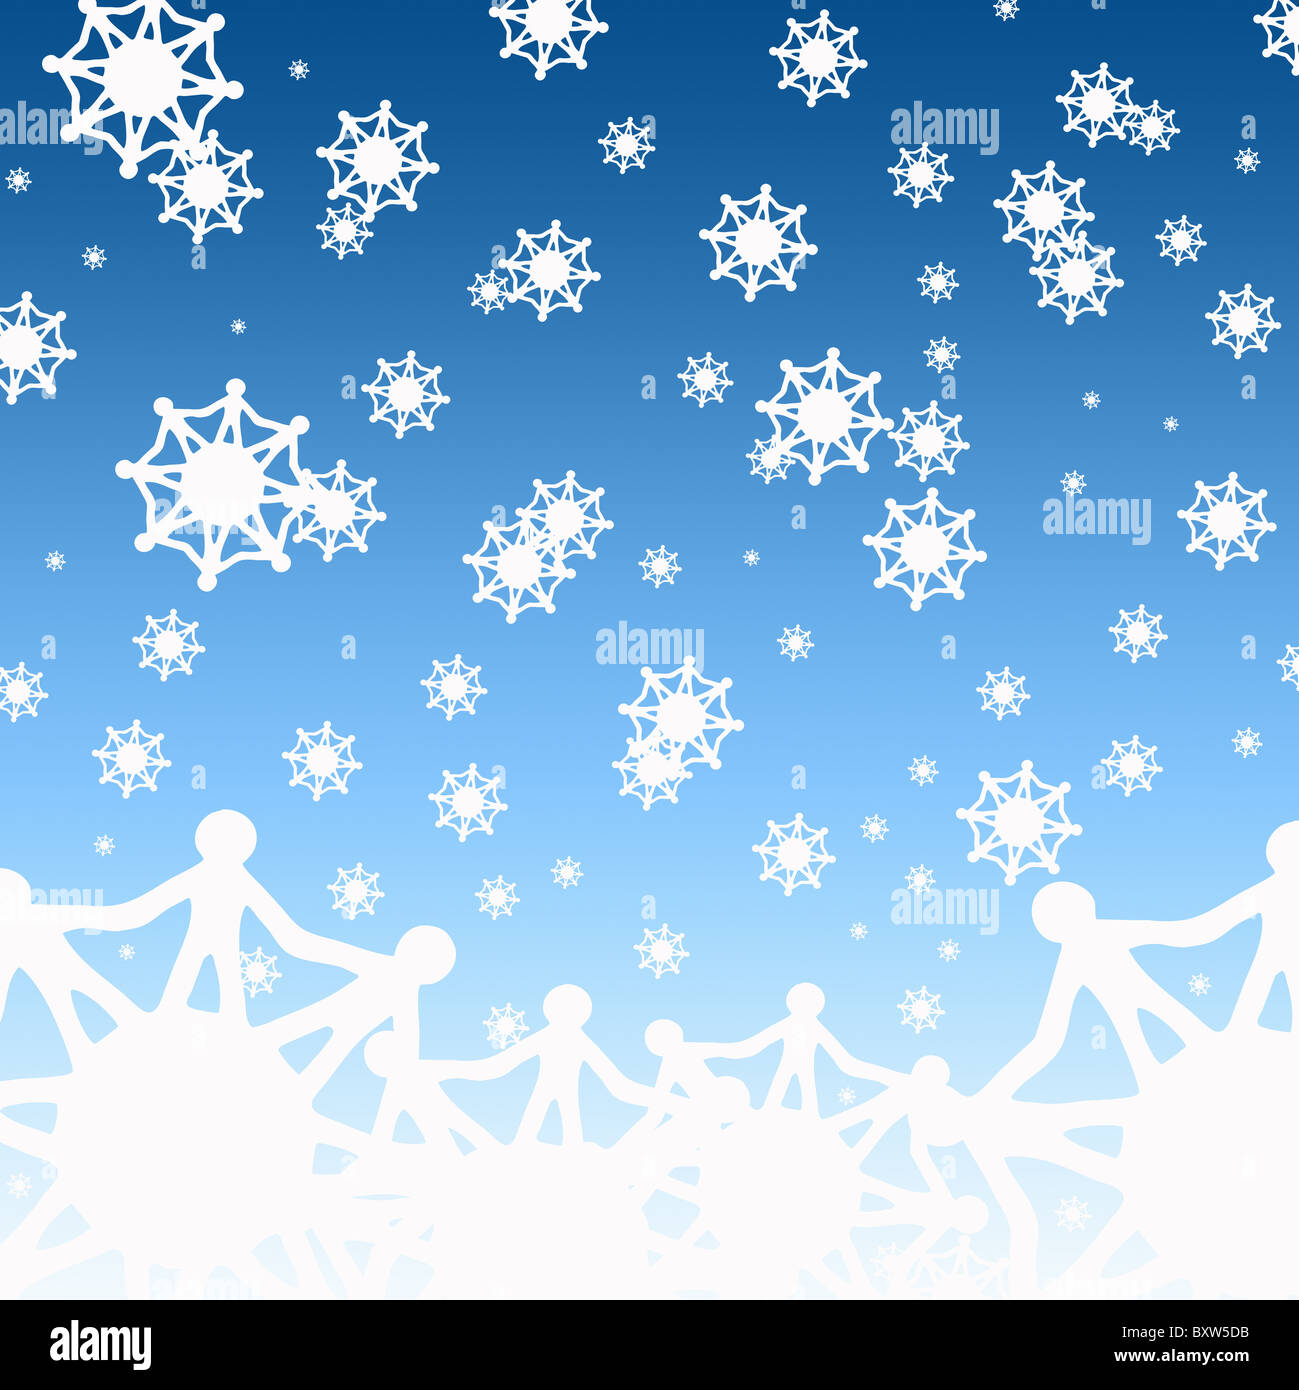 One world snowflake christmas card concept Stock Photo